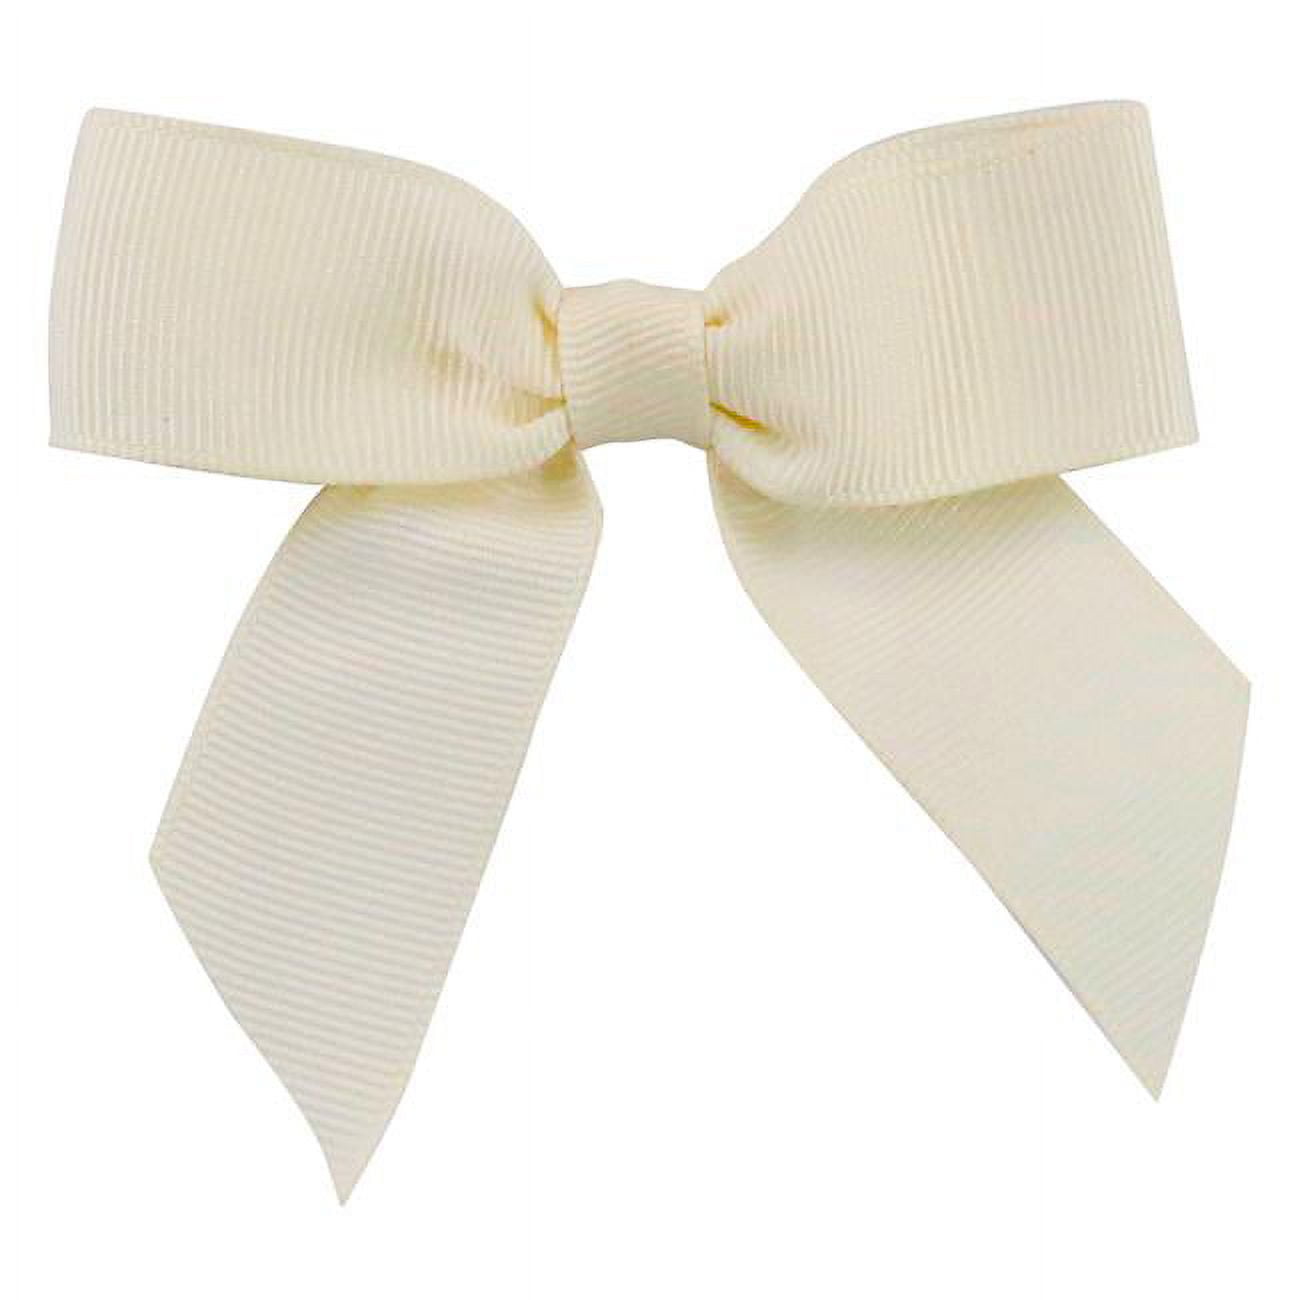 0.875 in. Grosgrain Twist Tie Bow, Antique White - Large - 100 Piece ...